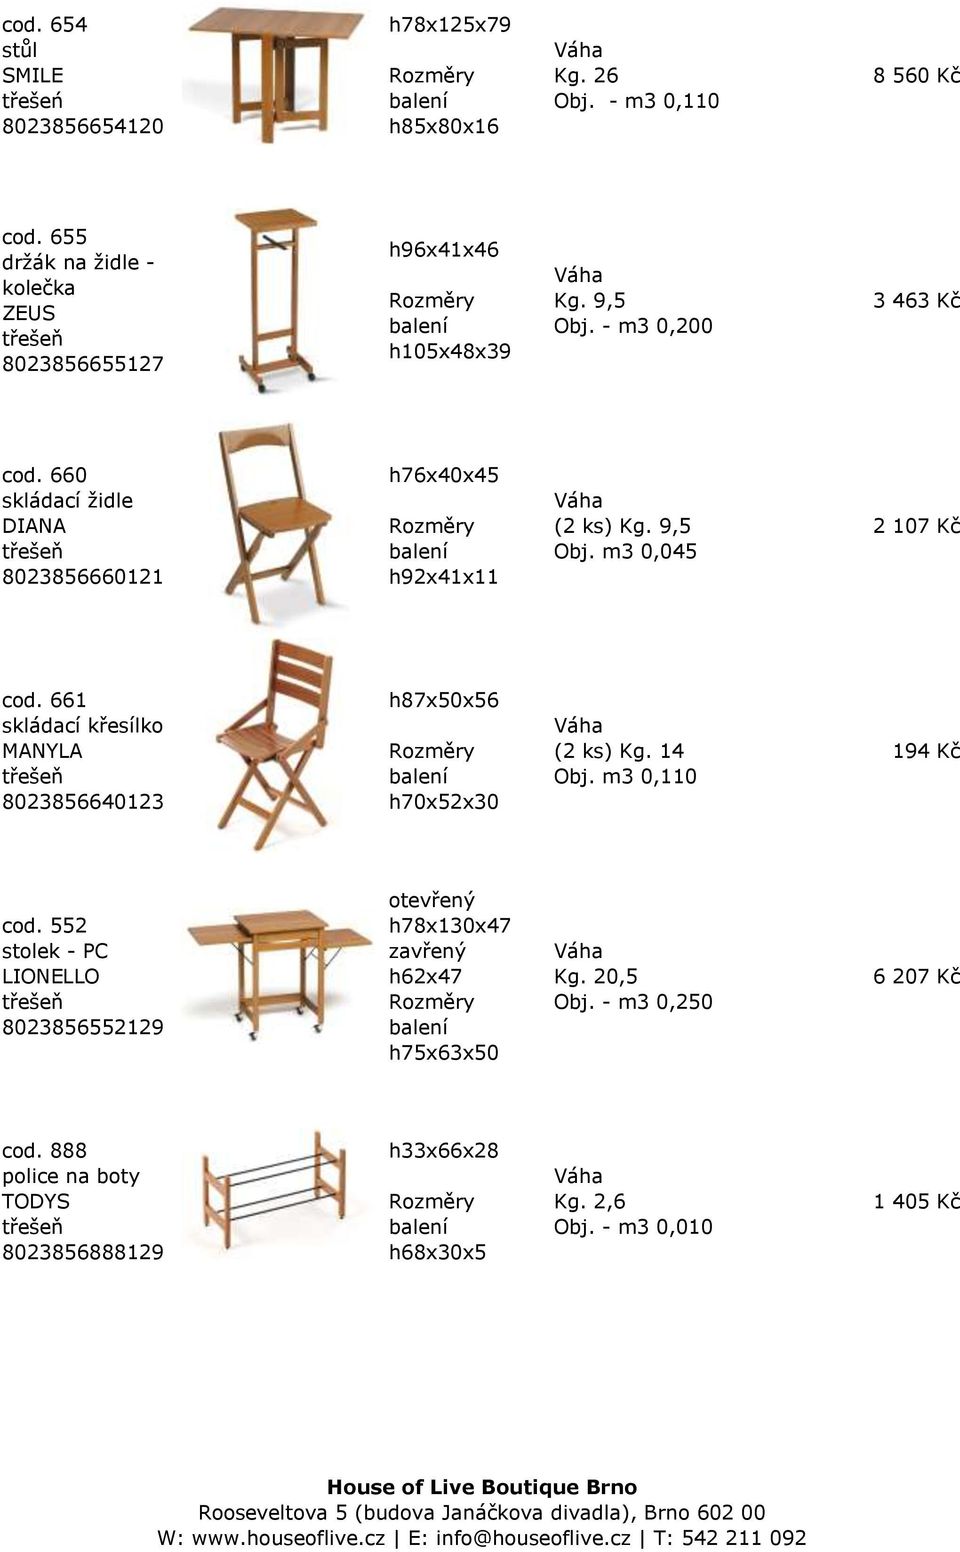 660 skládací židle DIANA 8023856660121 h76x40x45 h92x41x11 (2 ks) Kg. 9,5 Obj. m3 0,045 2 107 Kč cod.